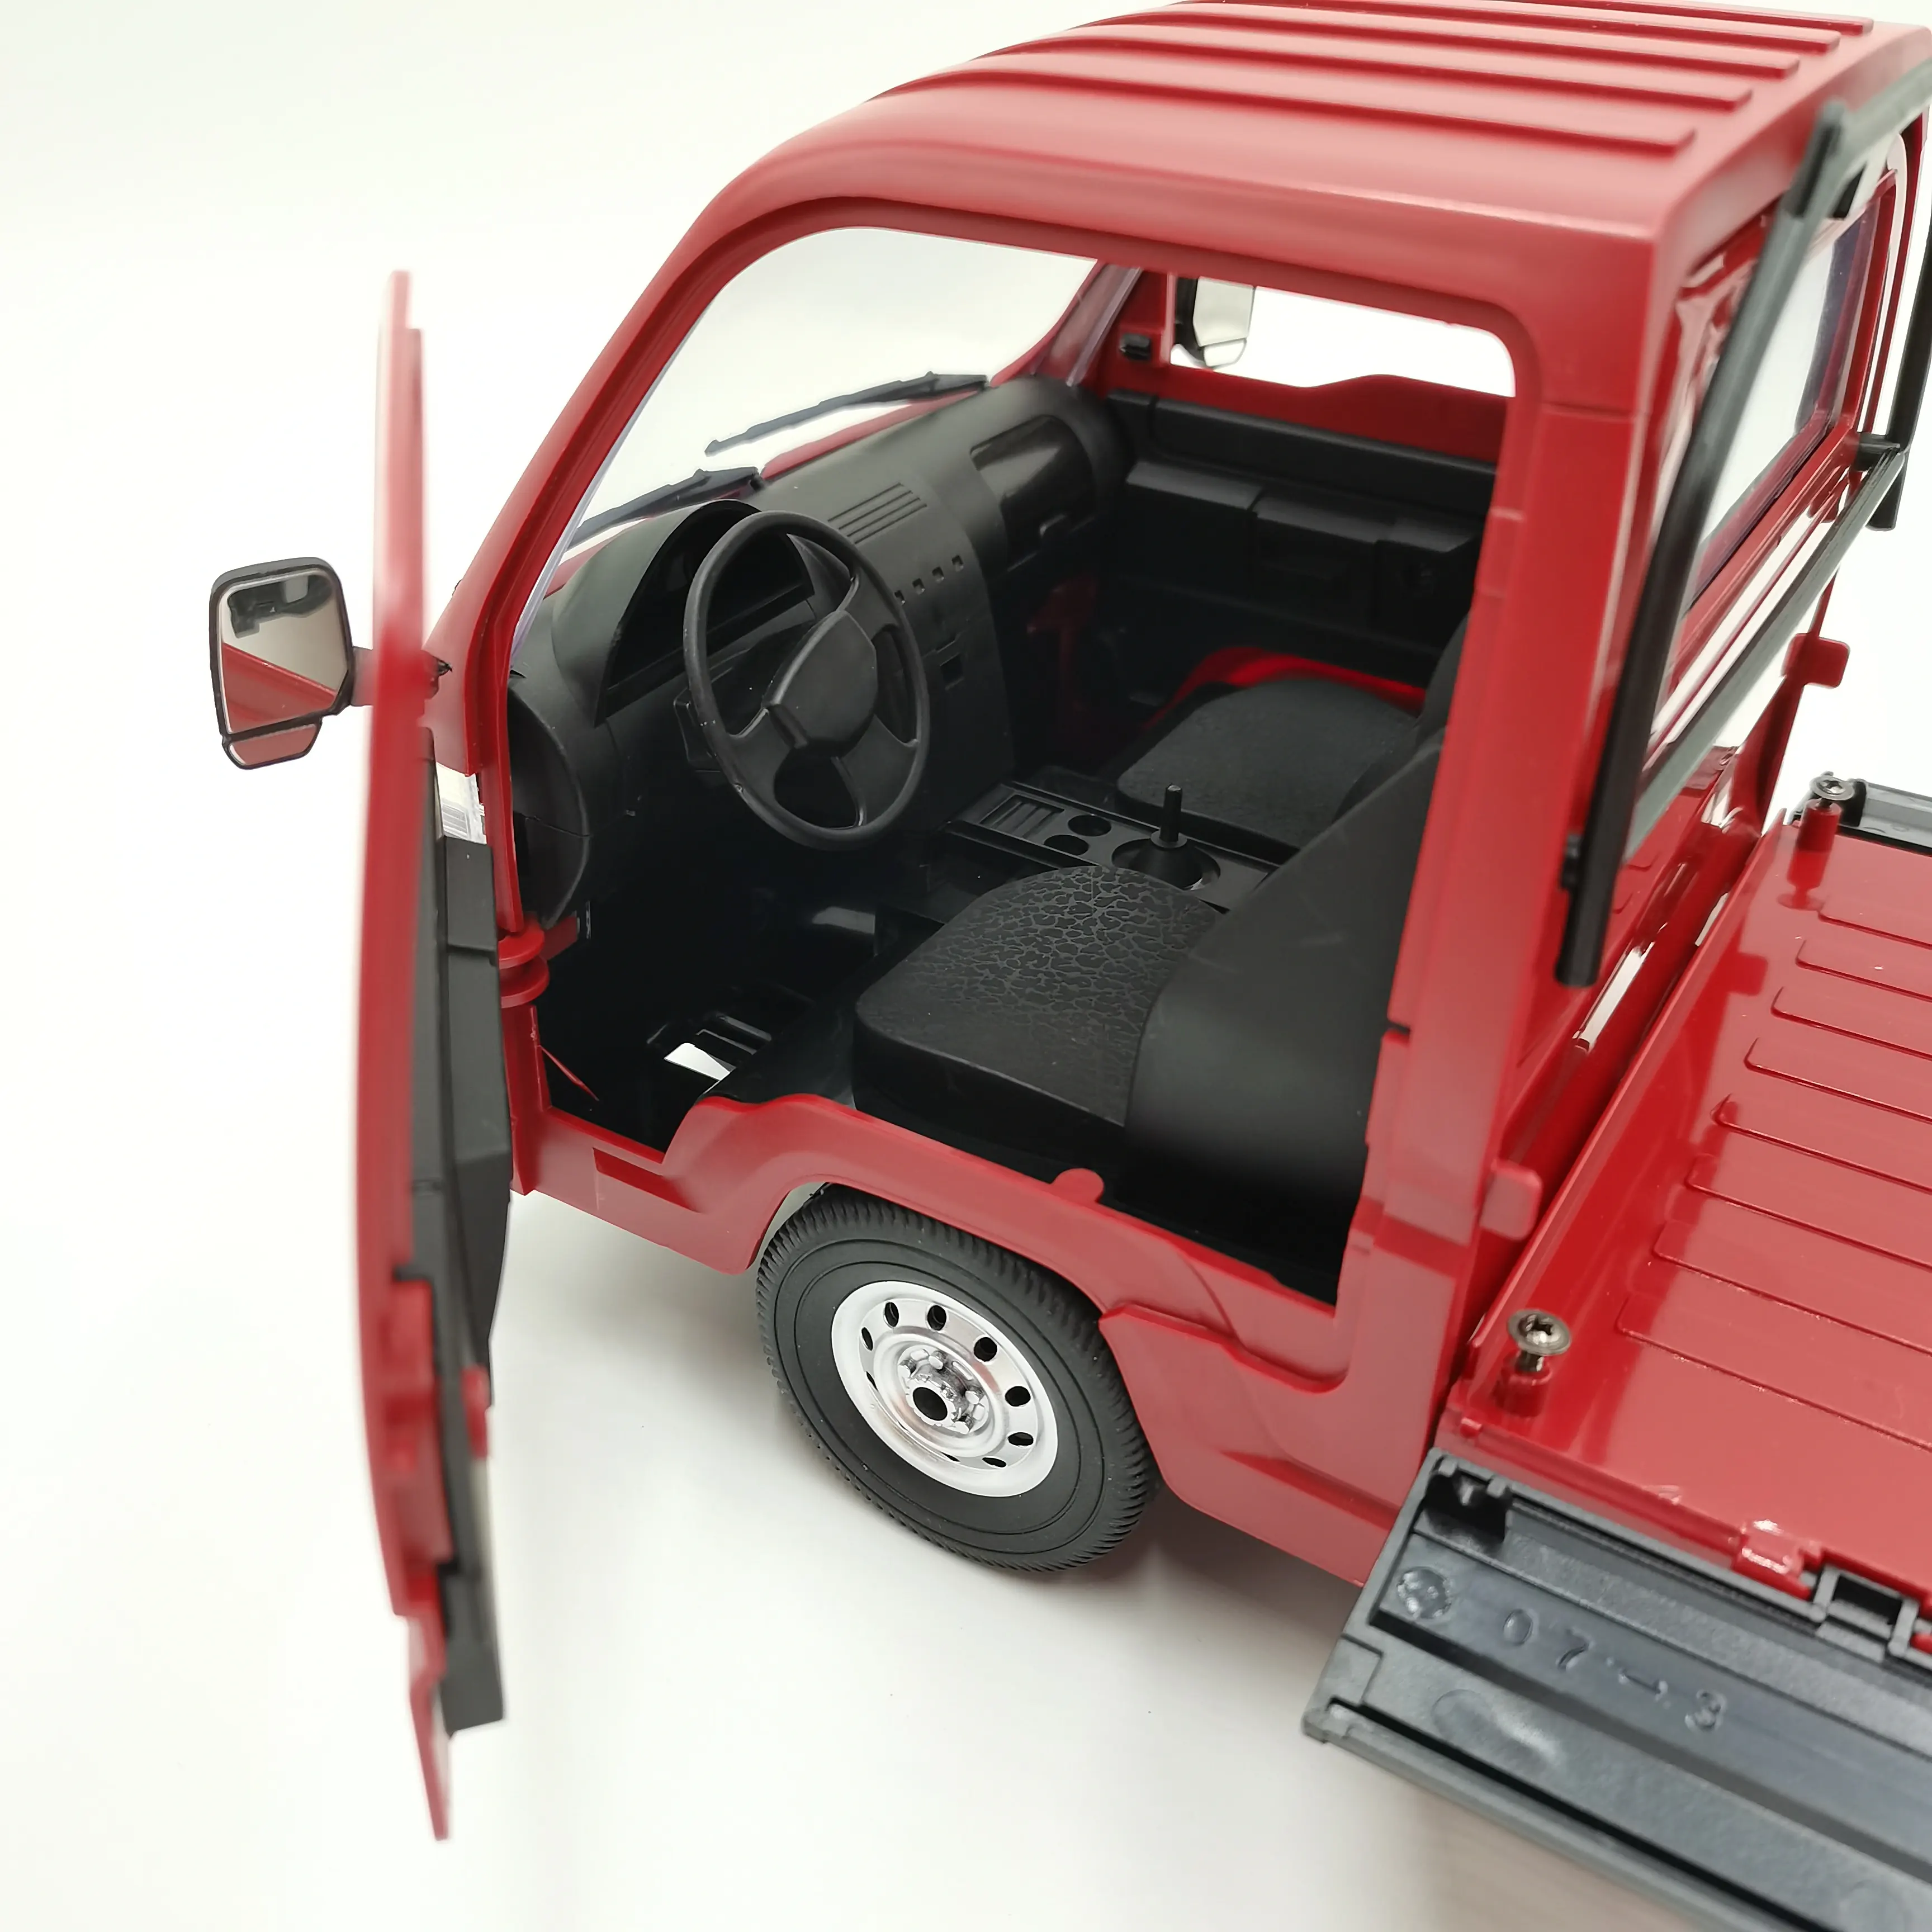 WPL 공장 도매 WL01 원격 제어 라디오 1/16 모델 등반 트럭 시뮬레이션 군사 트레일러 Rc 장난감 자동차 어린이를위한